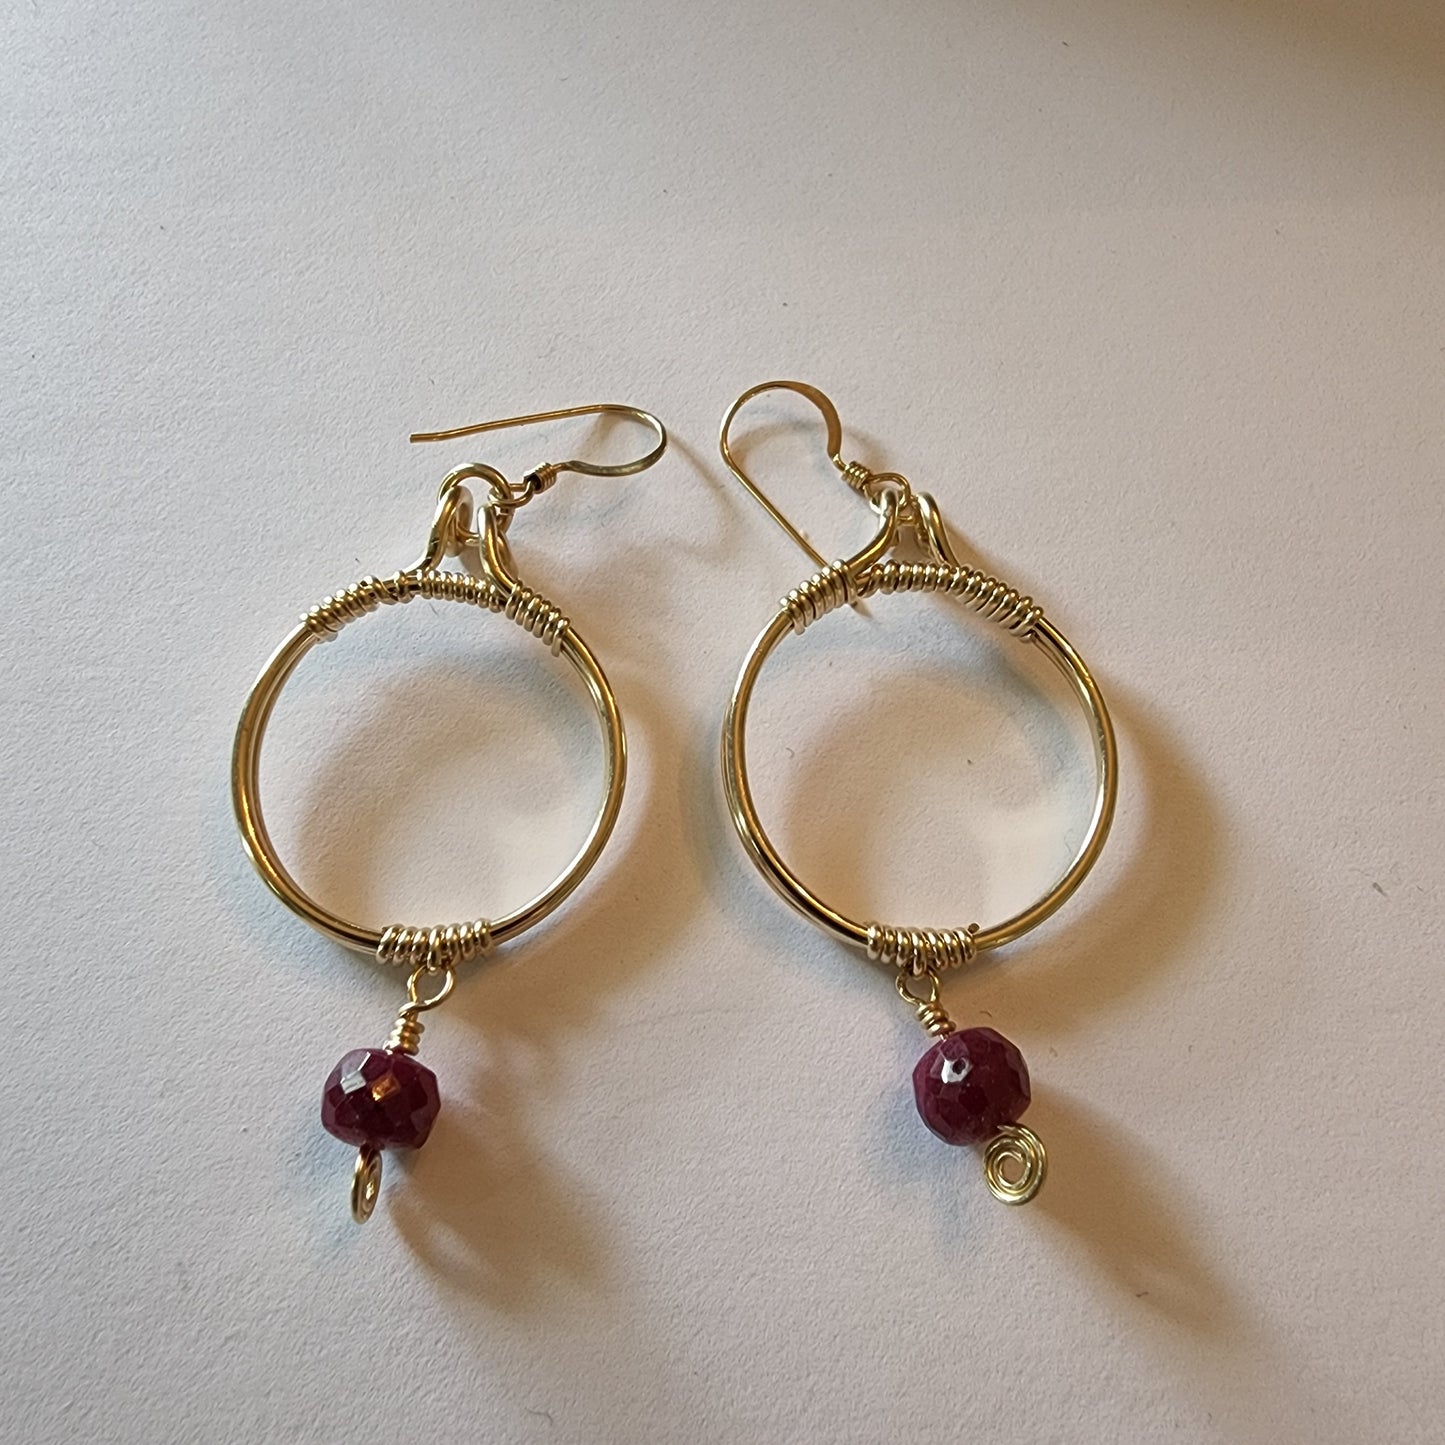 Handmade Woman Gold and Ruby Pierced Earrings